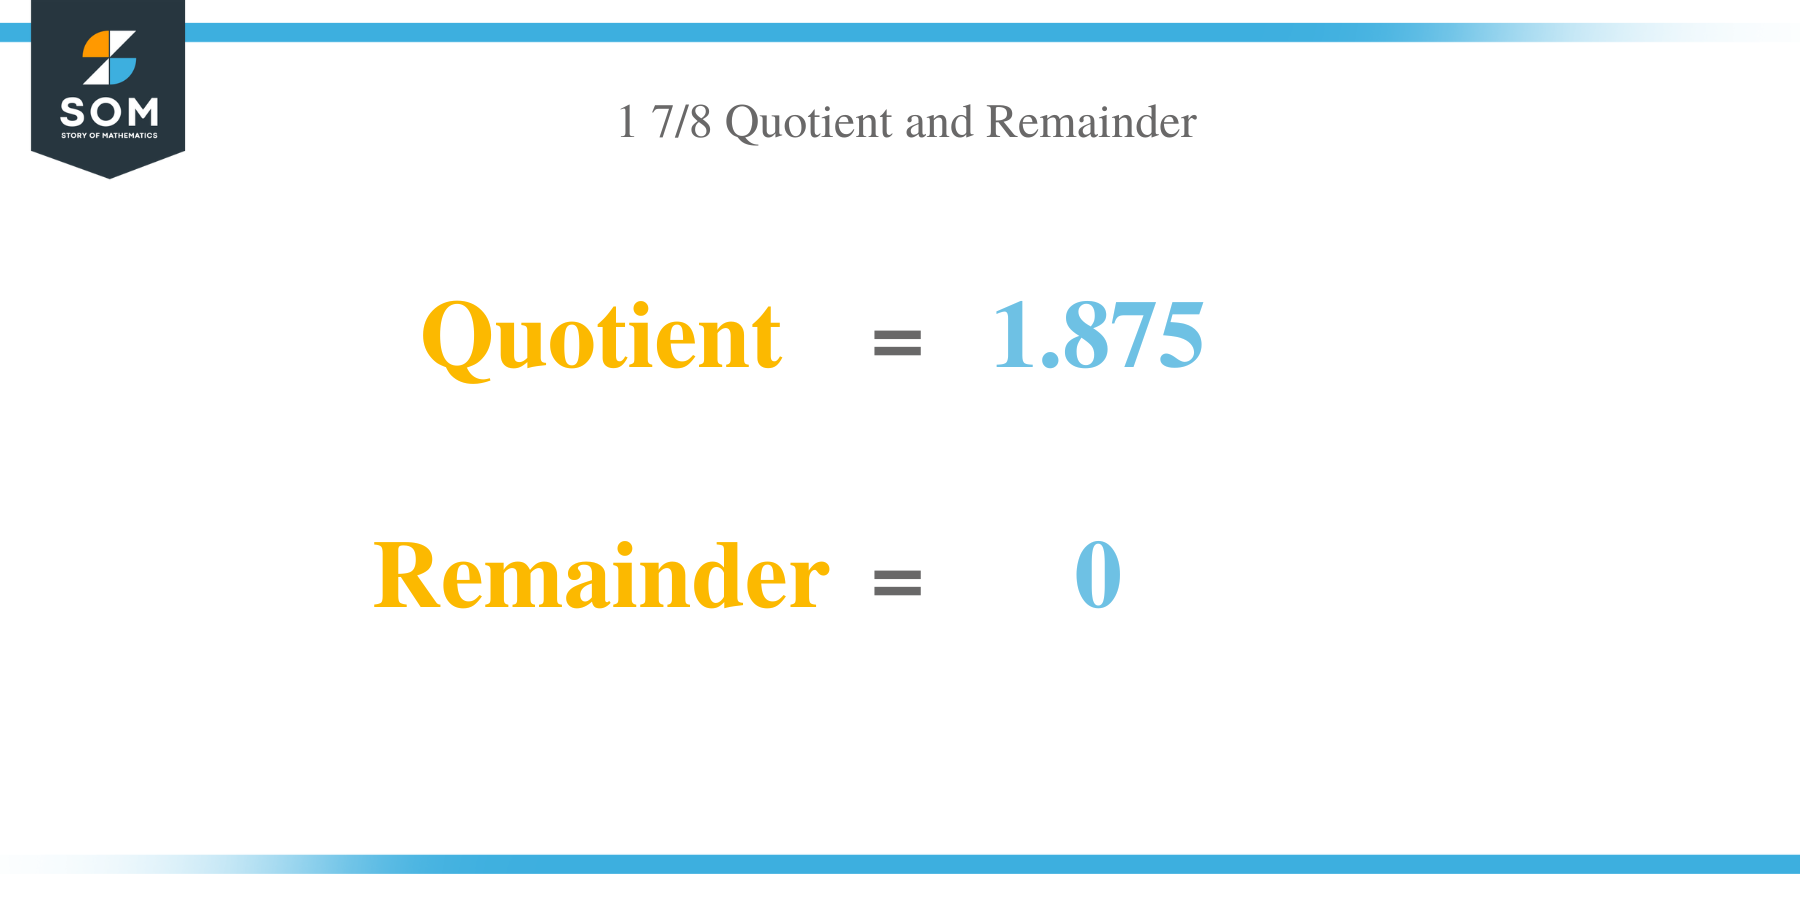 Quotient and remainder of 1 7 per 8